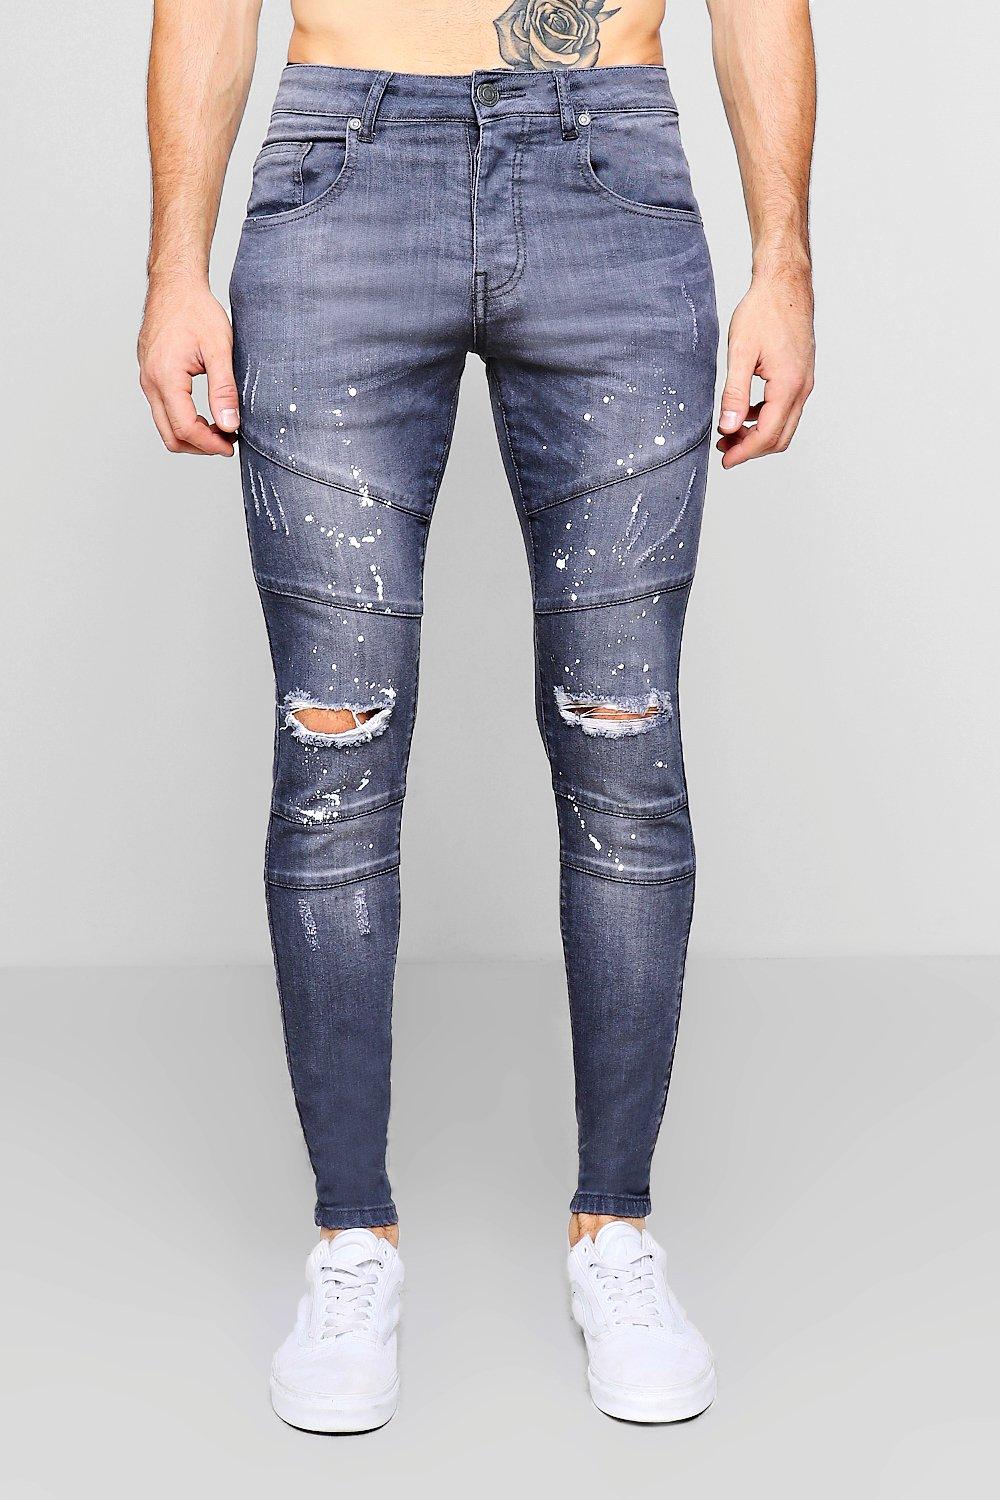 grey paint splatter jeans